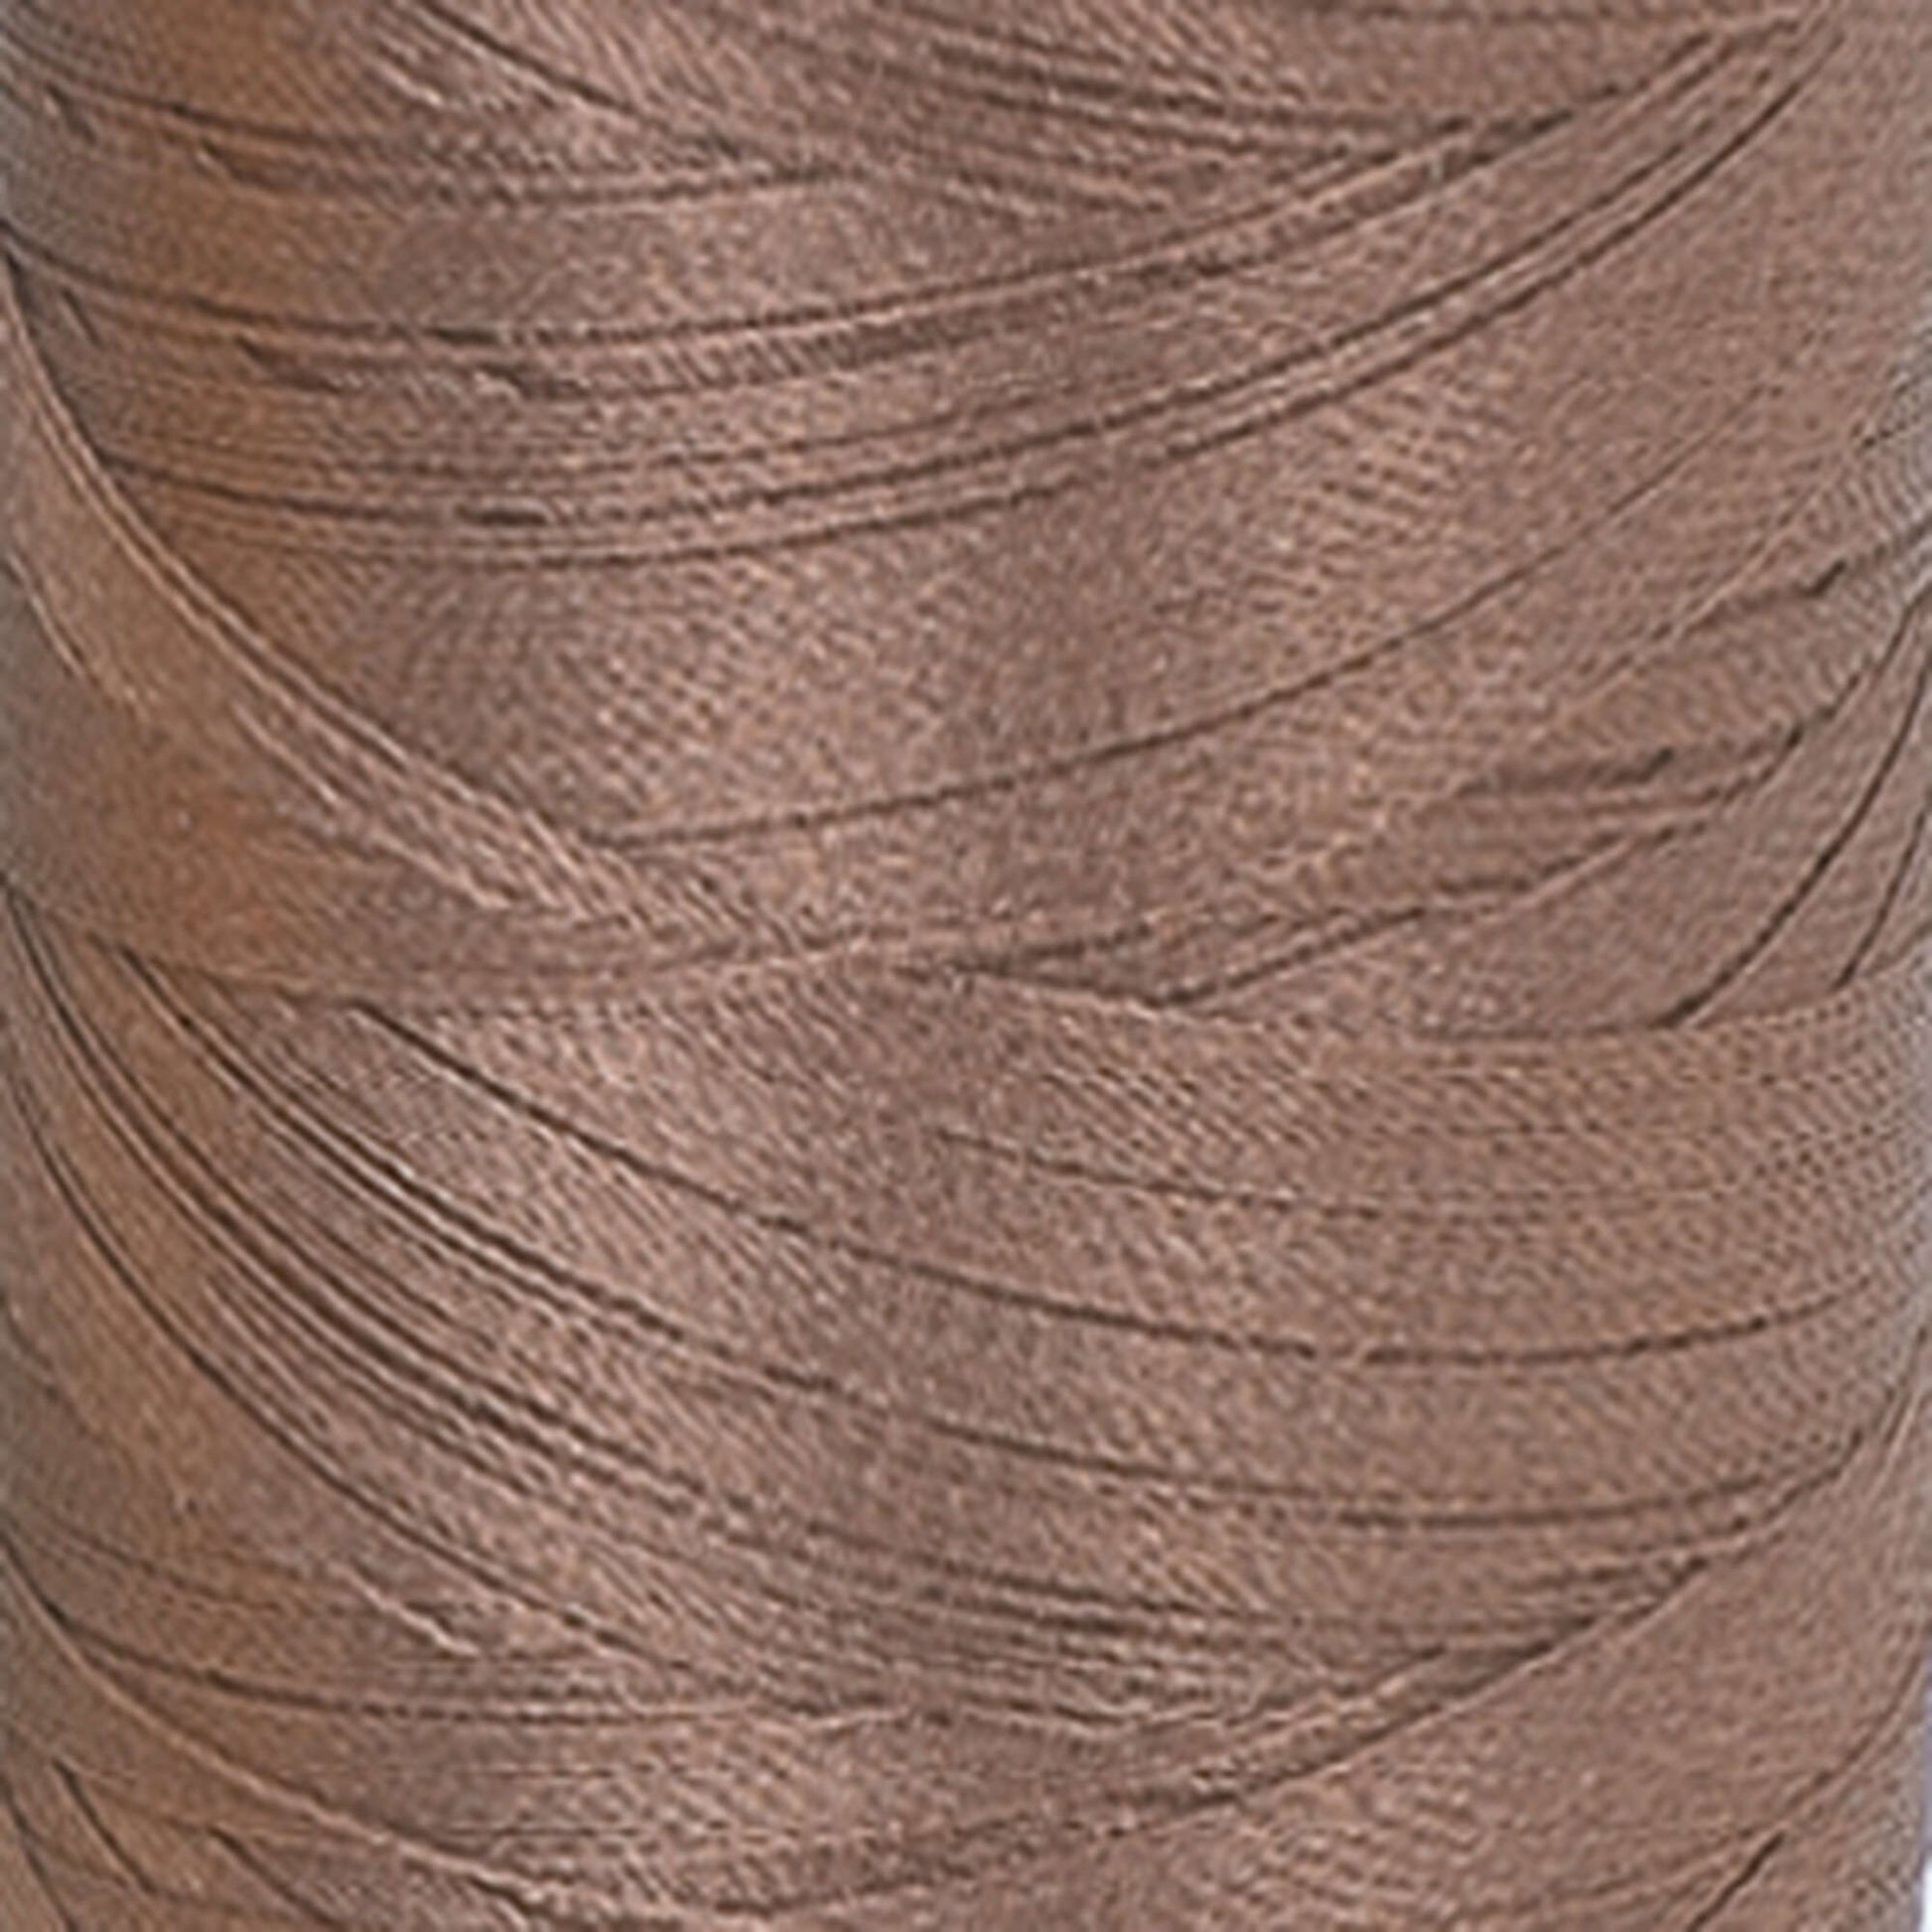 Coats & Clark Machine Embroidery Thread (1100 Yards) Summer Brown